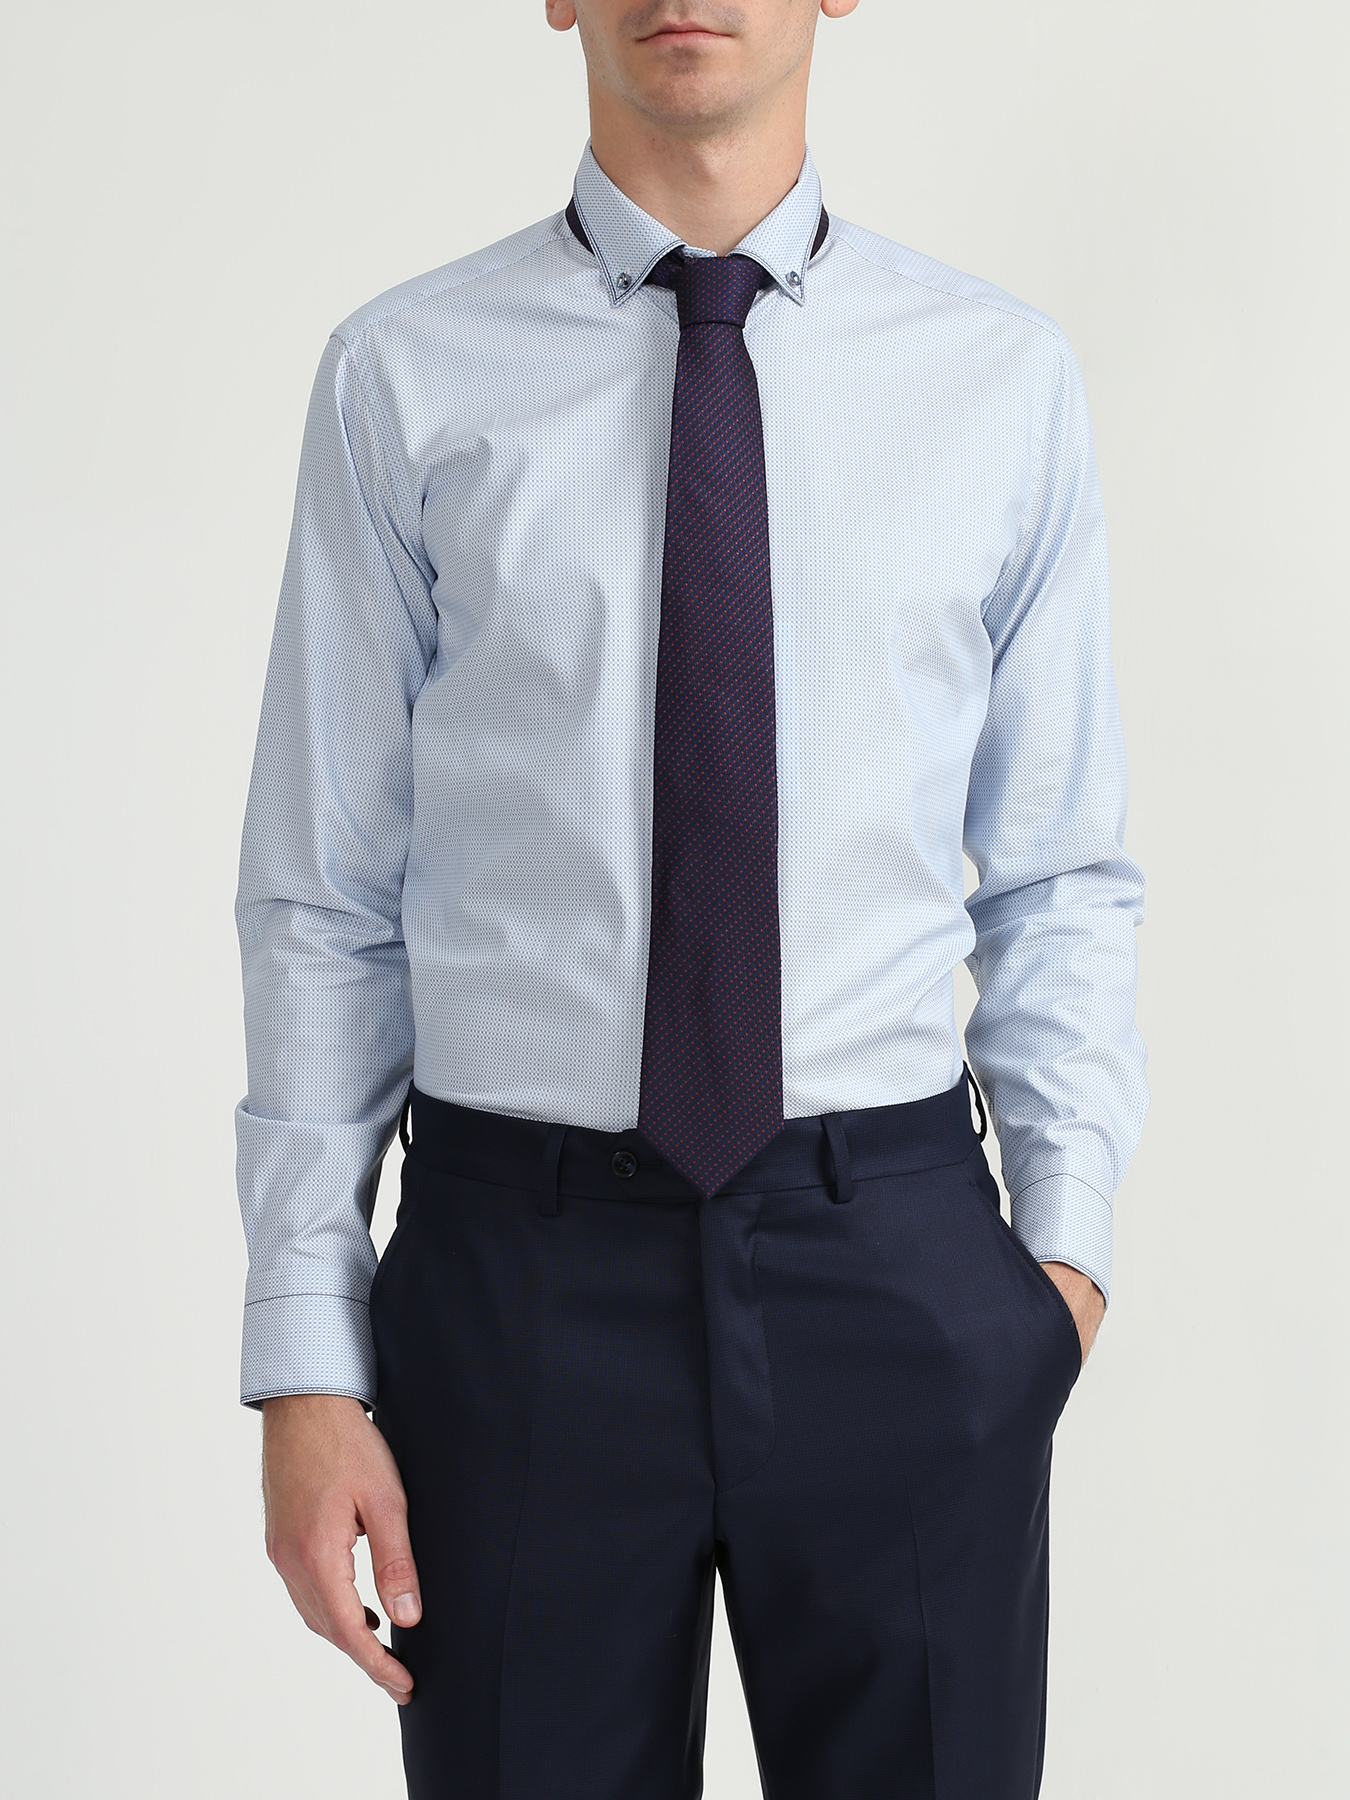 Ritter Шелковый галстук с узорами 323010-185 Фото 1